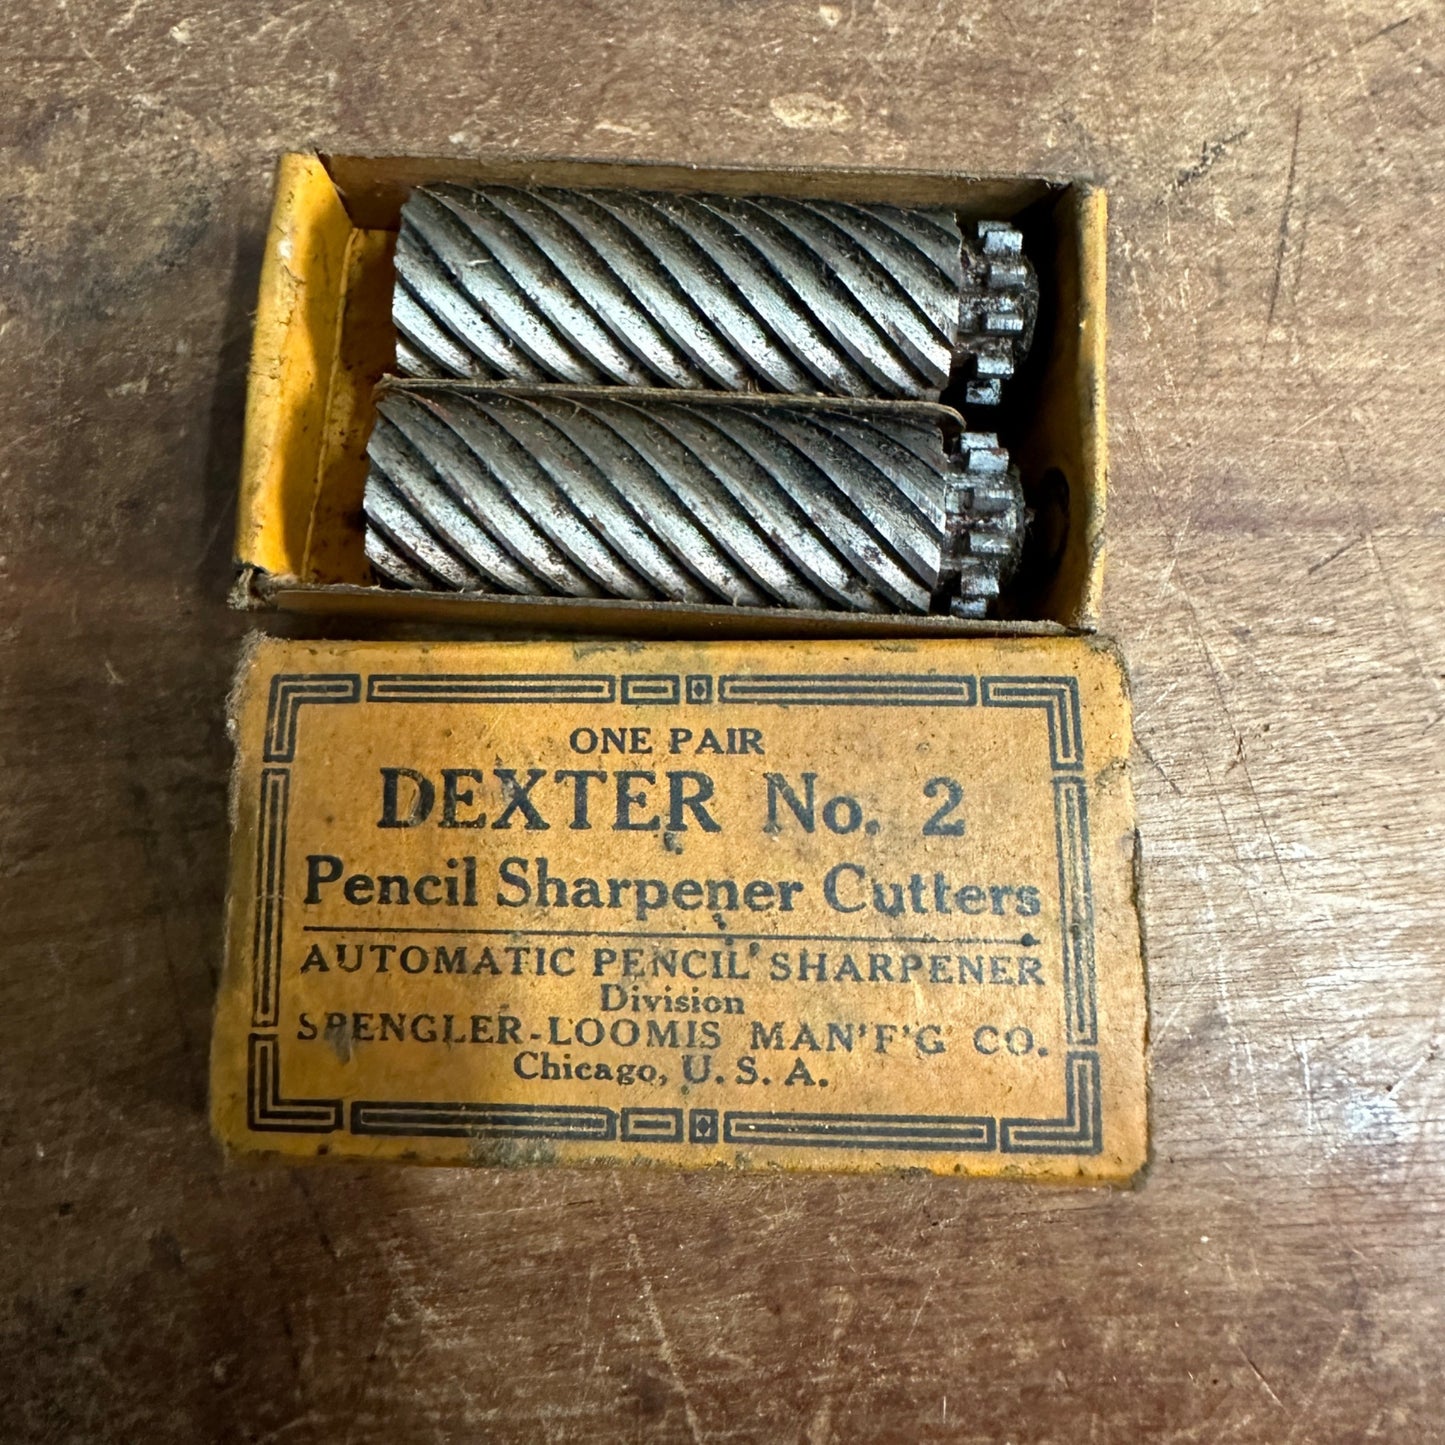 VINTAGE (1920S) DEXTER NO.2 PENCIL SHARPENER CUTTERS (PAIR) IN ORIGINAL BOX!